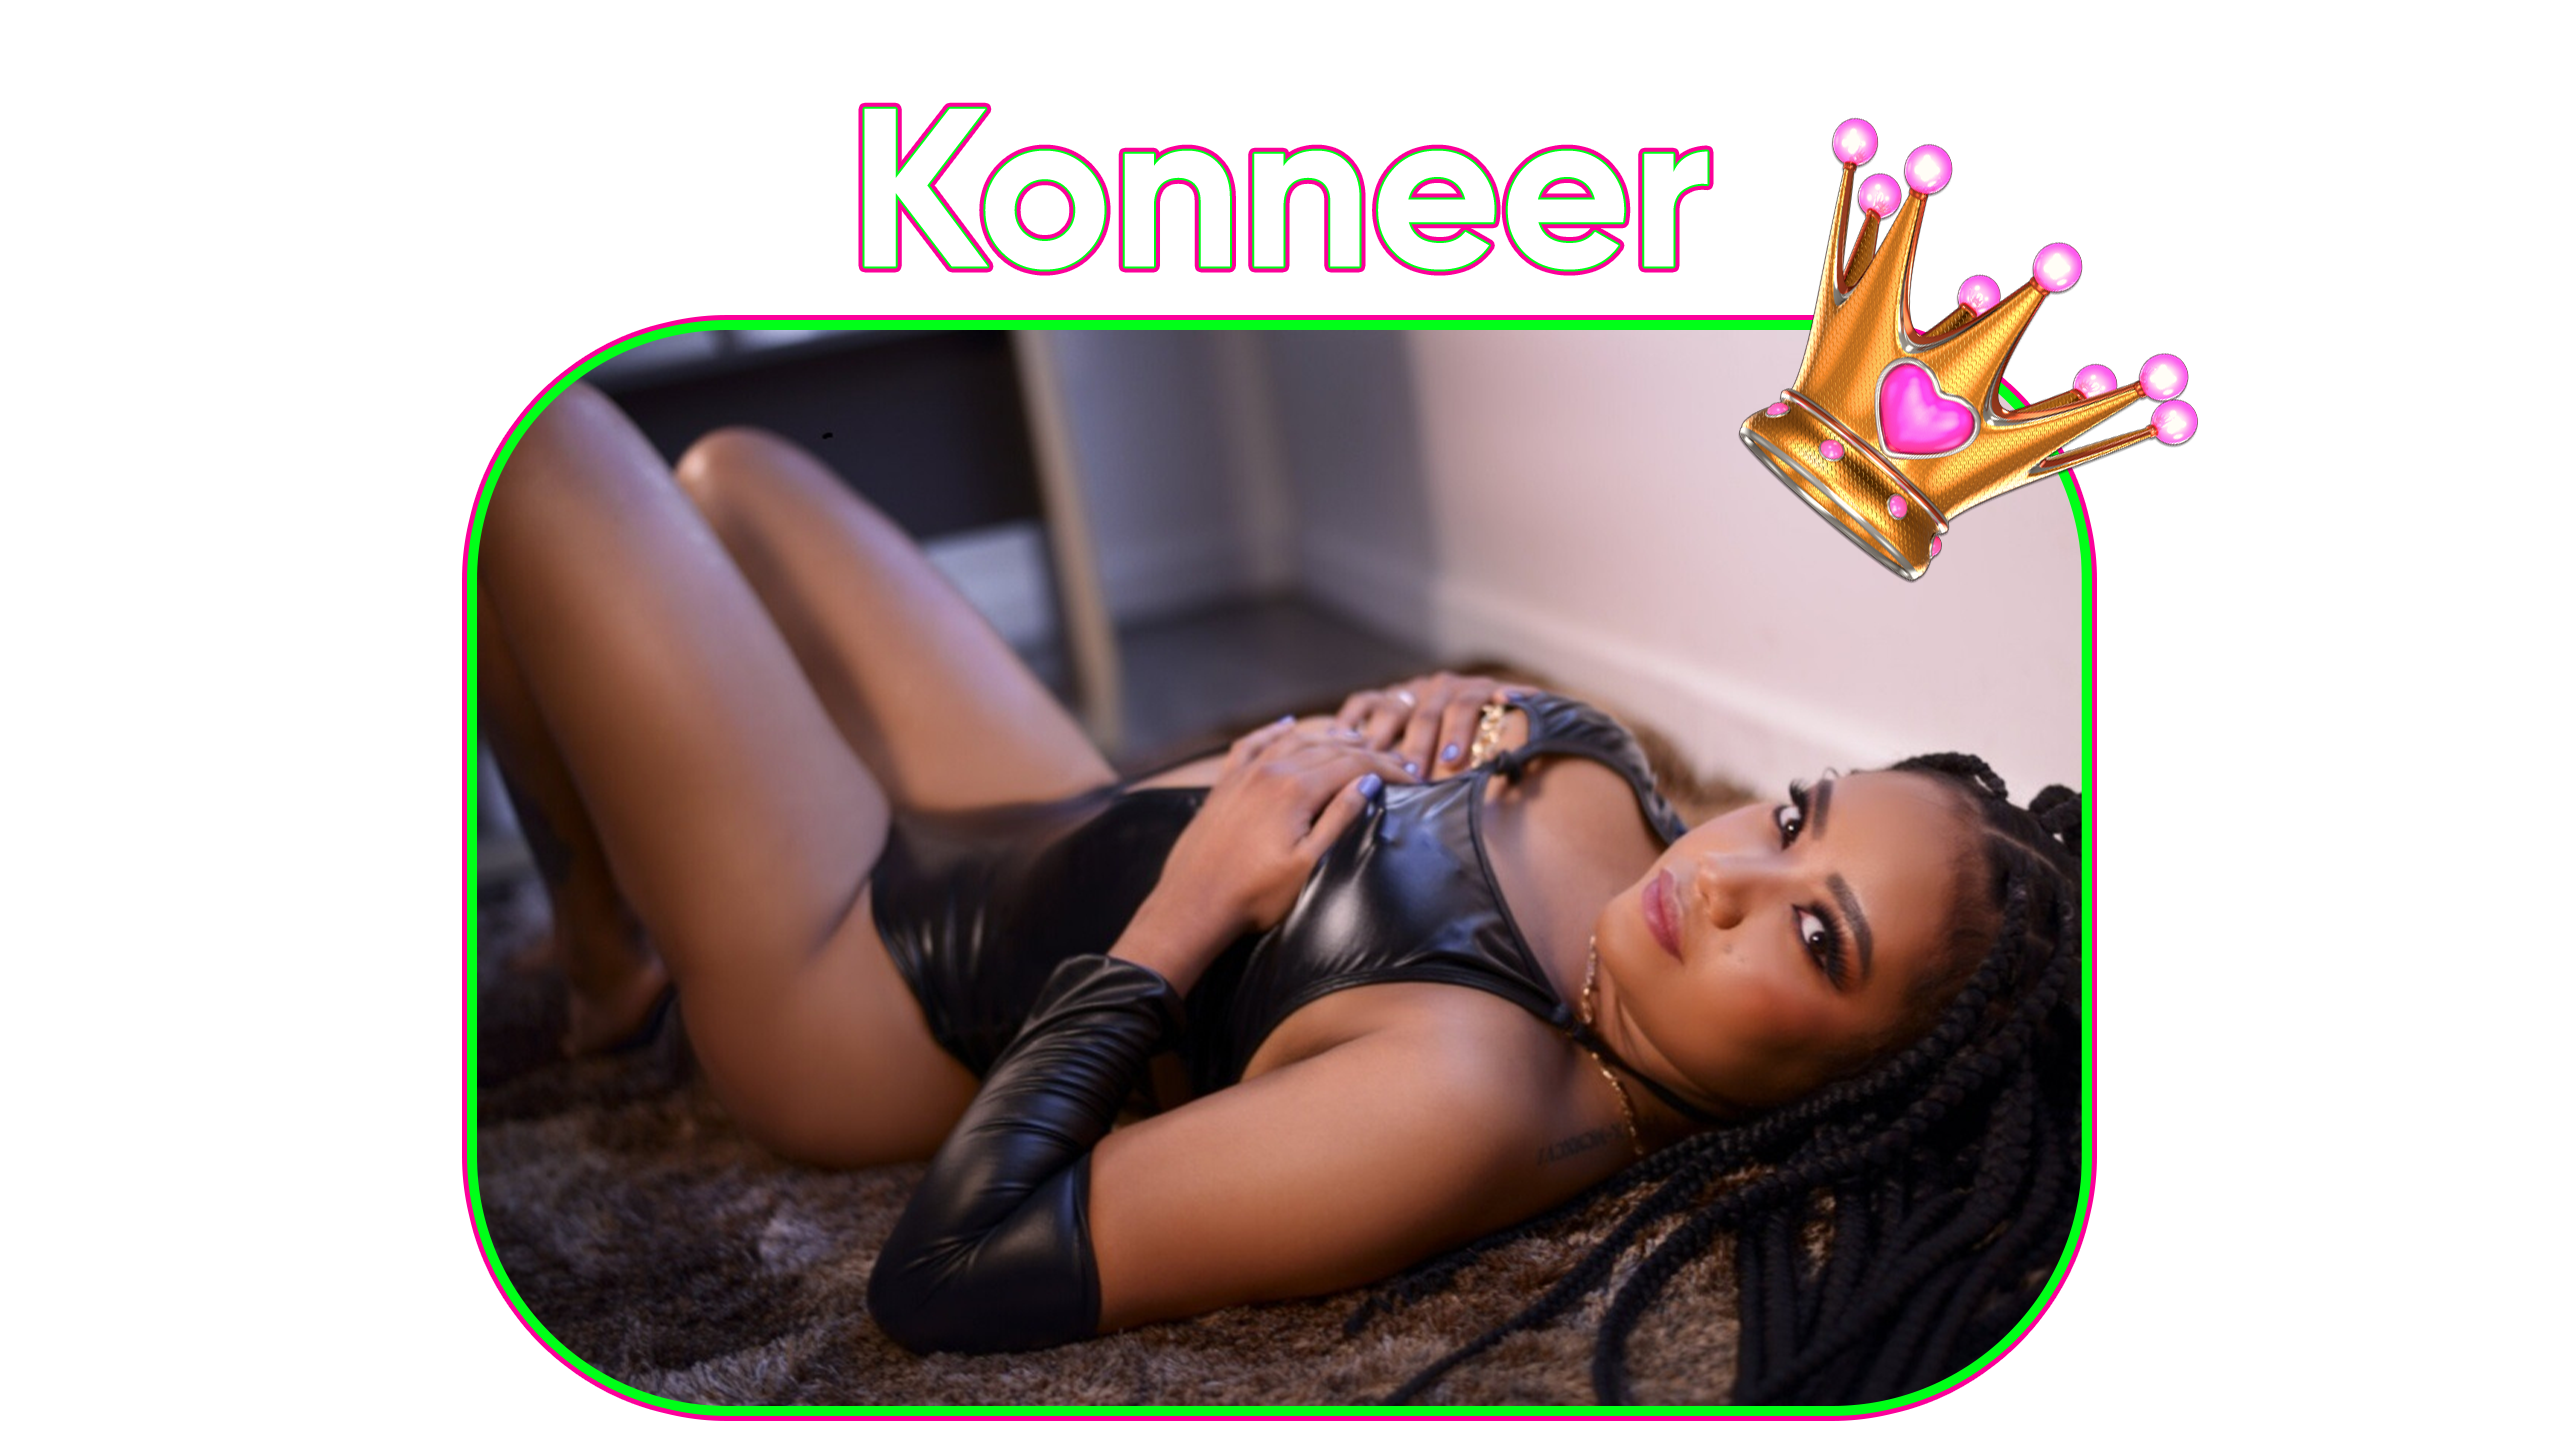 Konneer Hello! Welcome to my room! image: 1